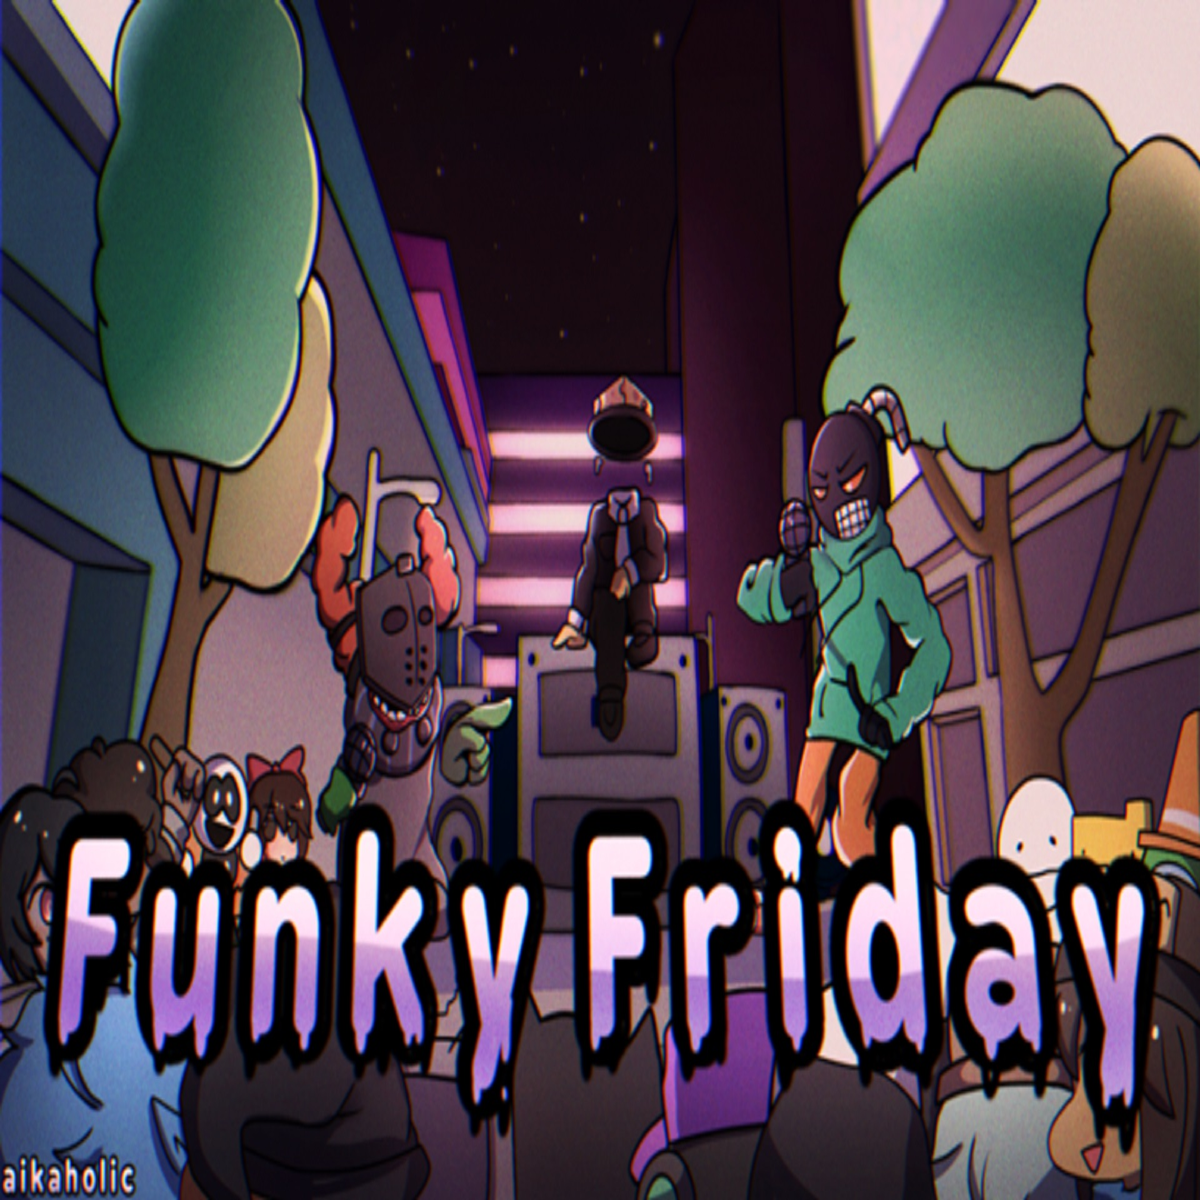 Funky Friday codes (December 2023) - GuíasTeam